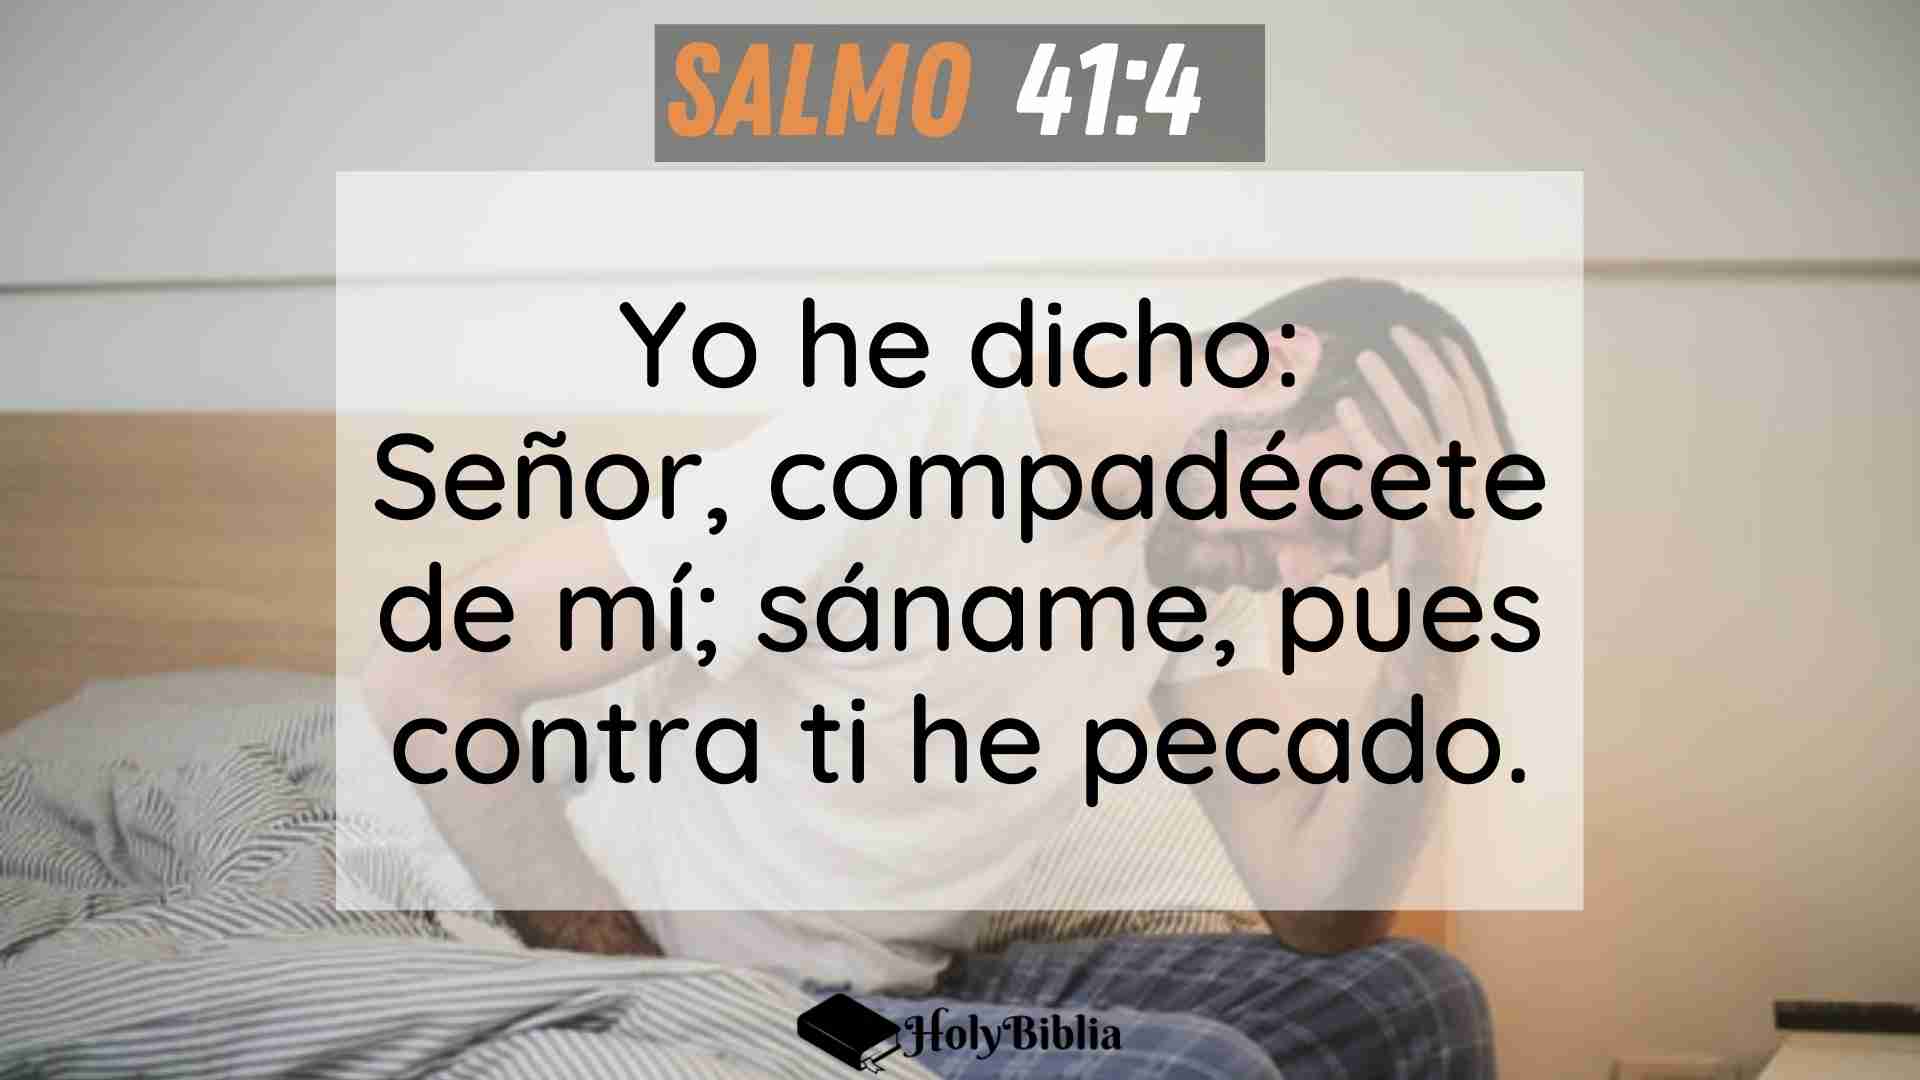 Salmo 41:4